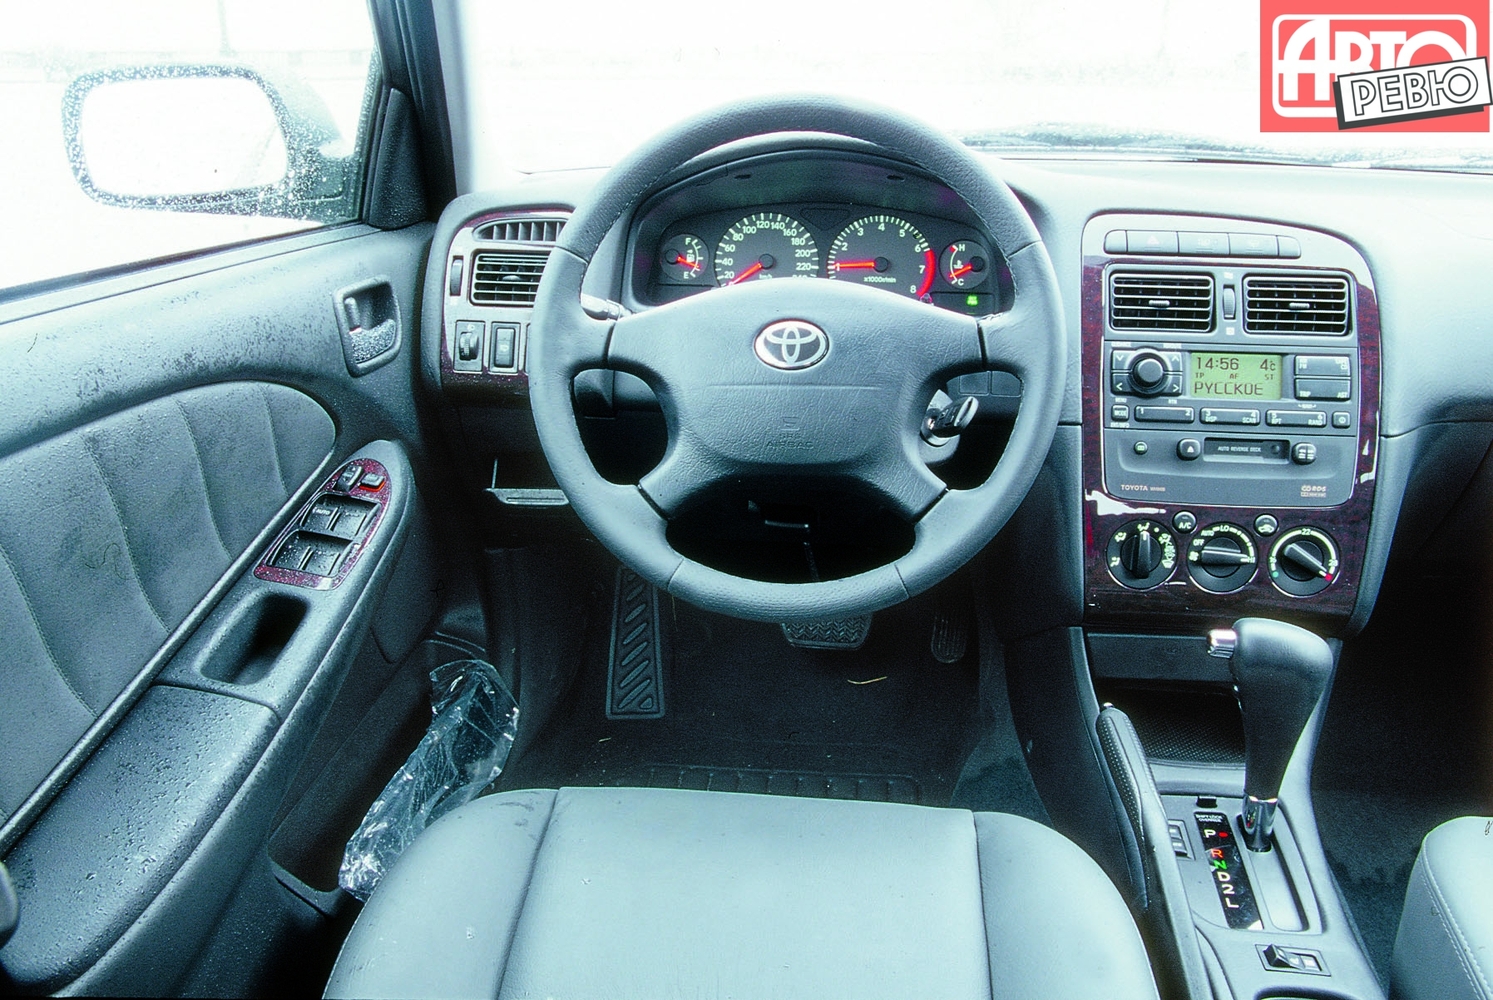 седан Toyota Avensis 2000 - 2003г выпуска модификация 1.6 MT (110 л.с.)